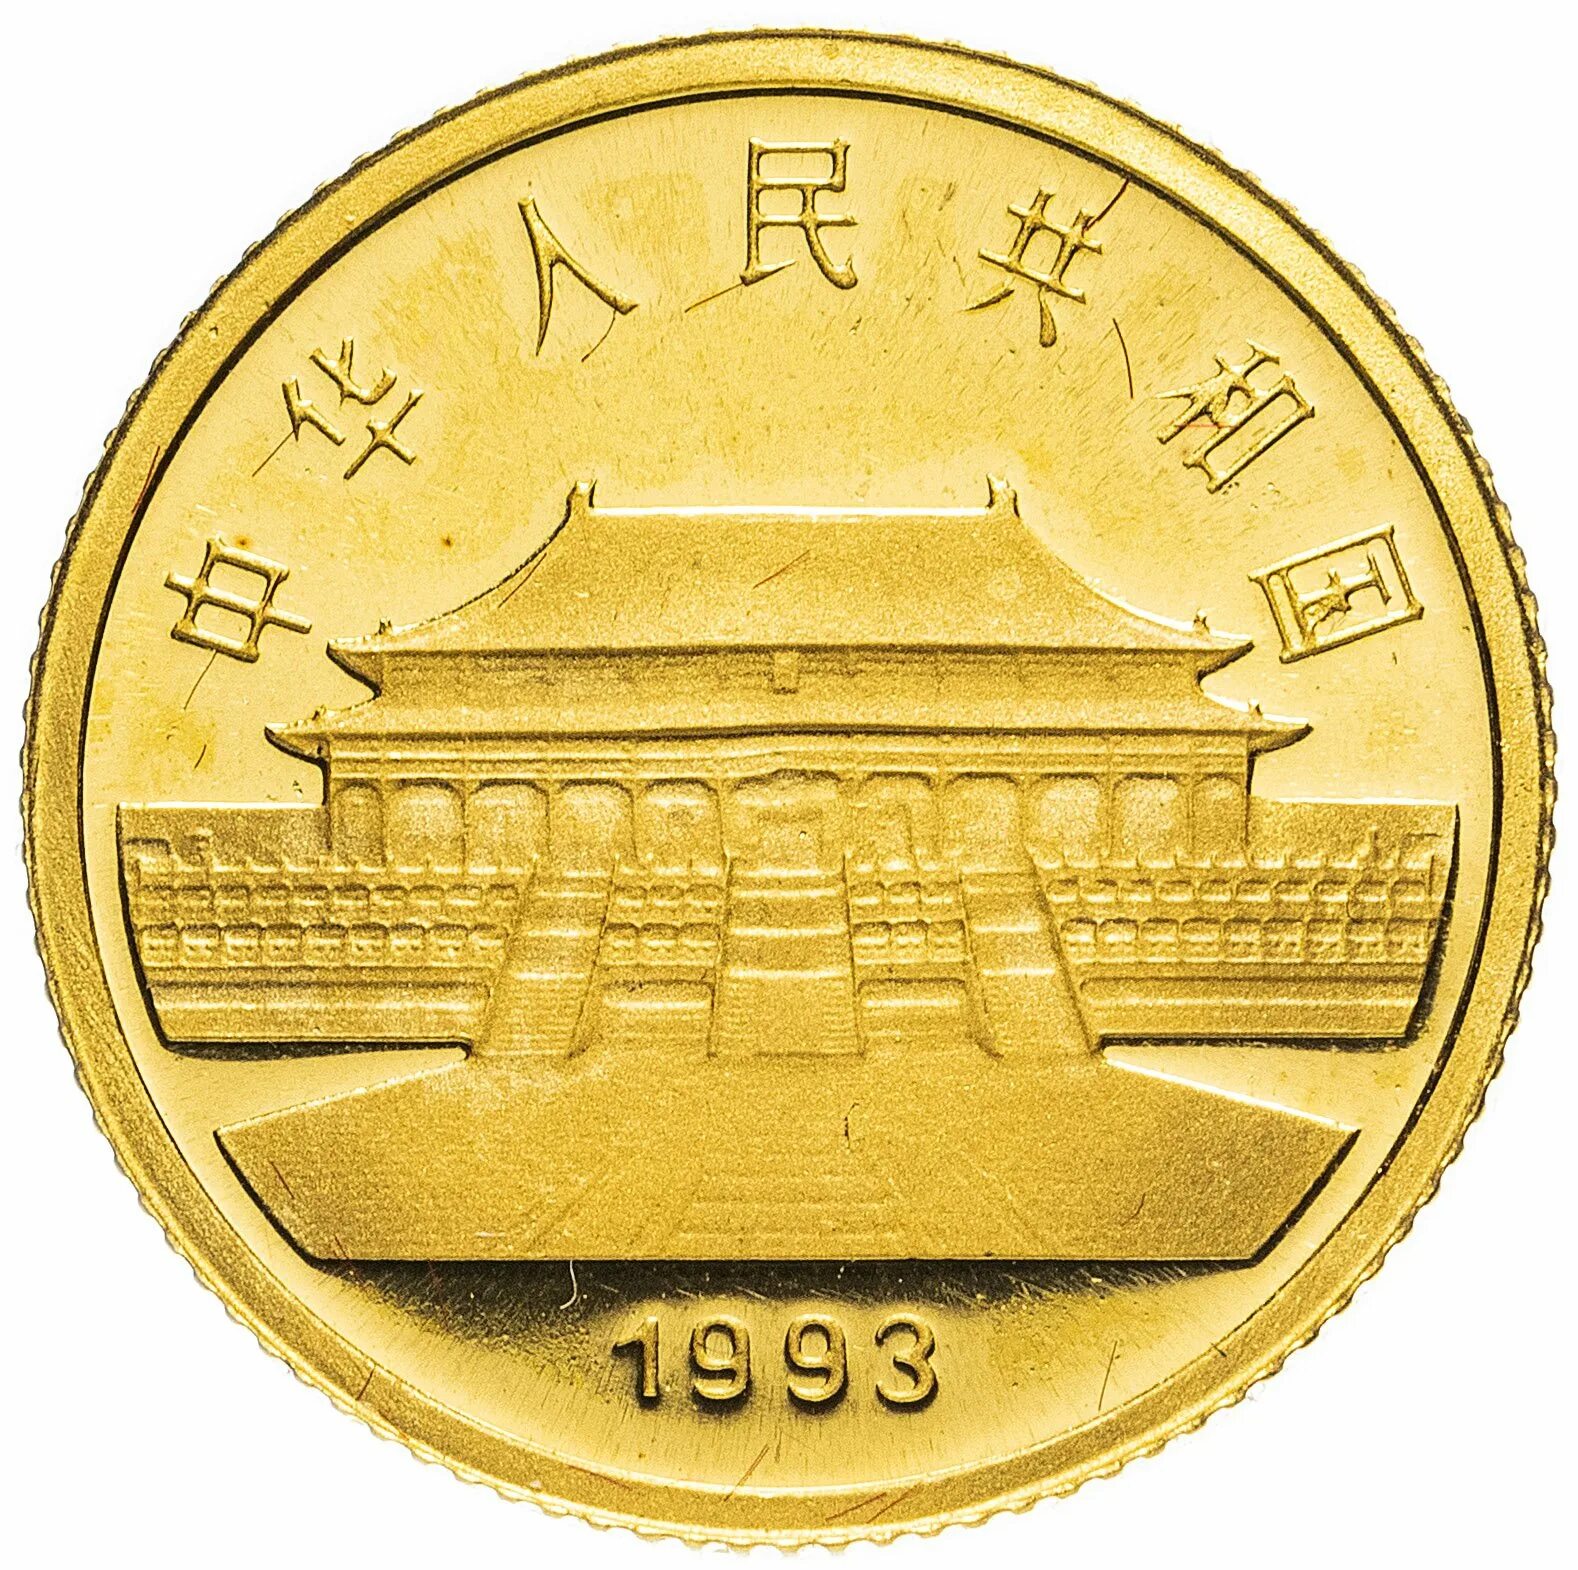 Китайский юань монеты. 10 Китайских юаней. Юань монеты Китая. Китайские монеты 10 юань. Монета Китай 10 юань древняя.